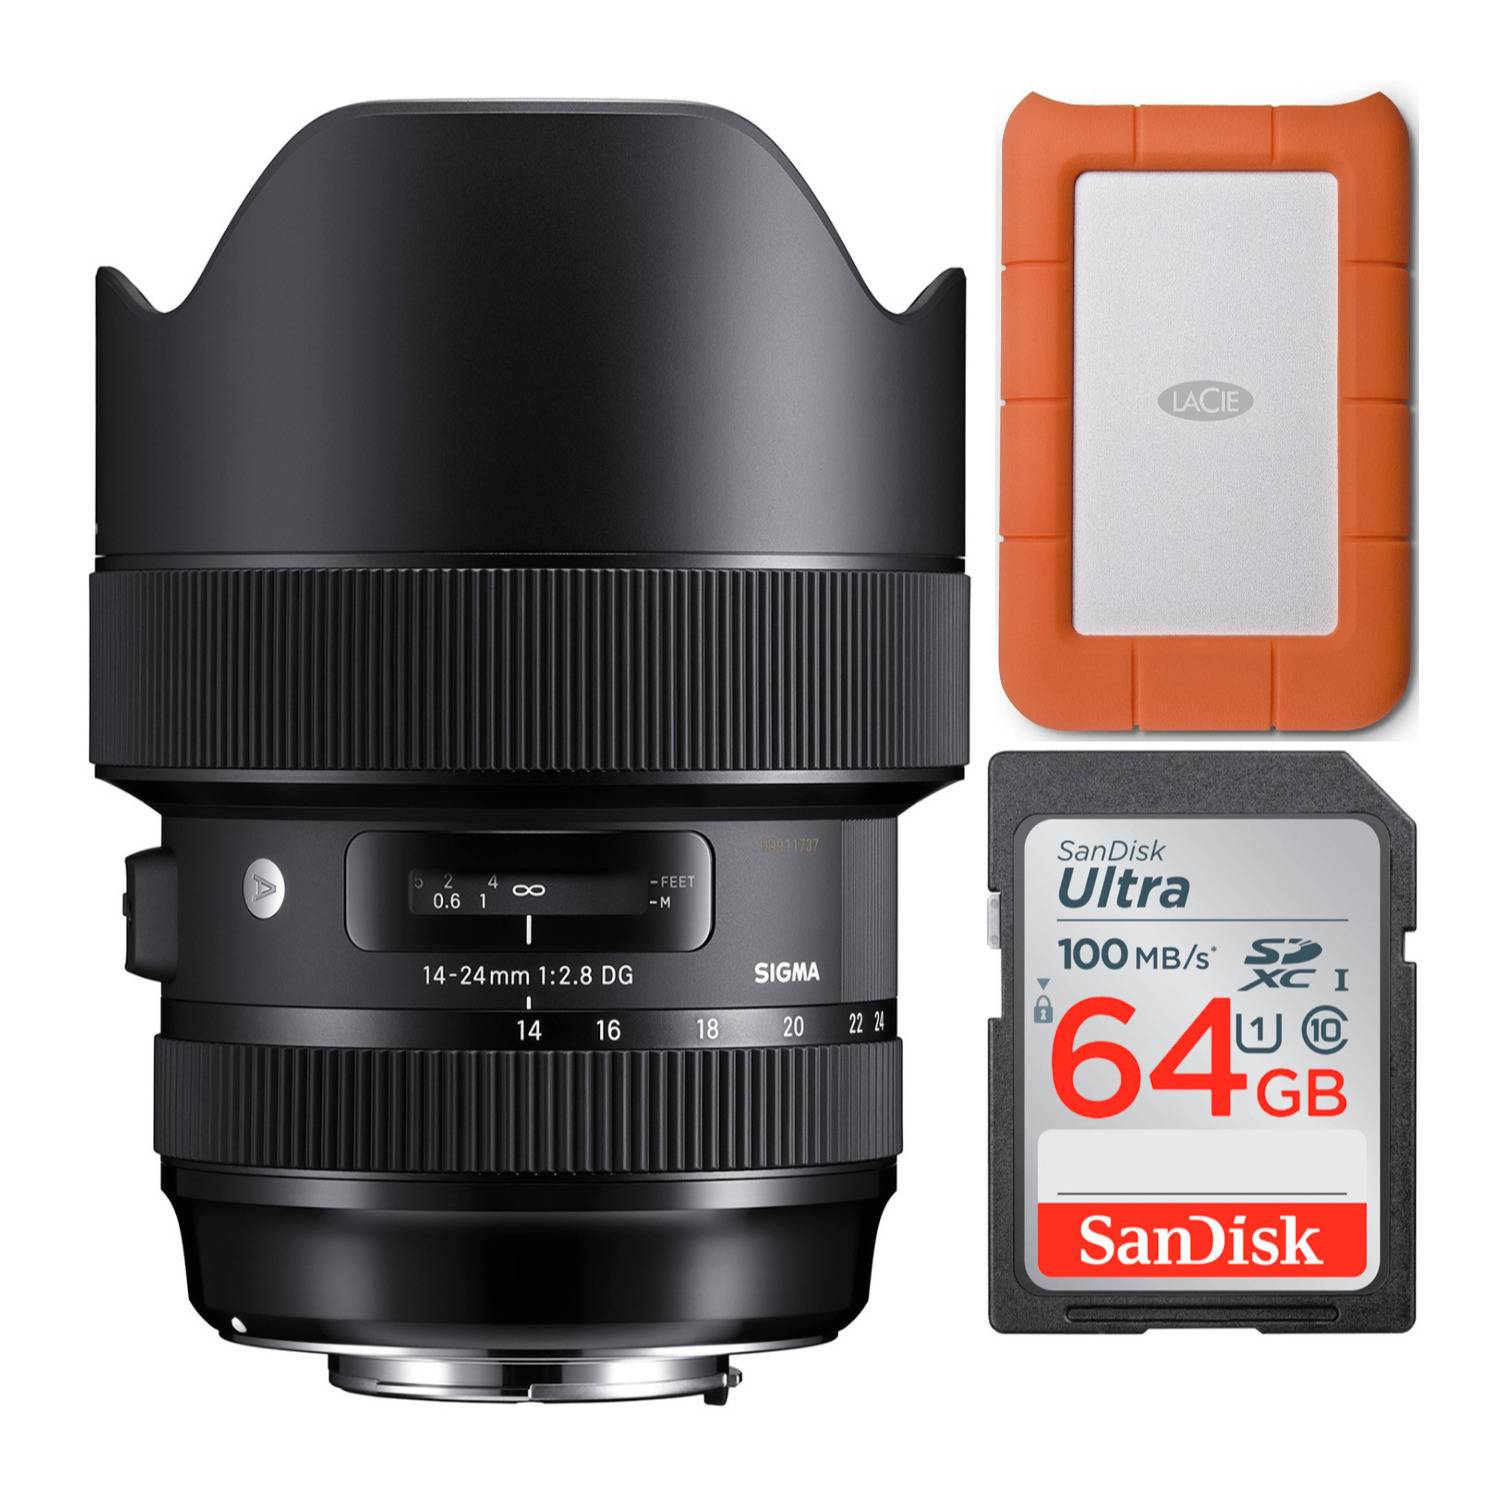 Sigma 14-24mm F2.8 DG HSM Art Lens for Canon Hard Drive Bundle